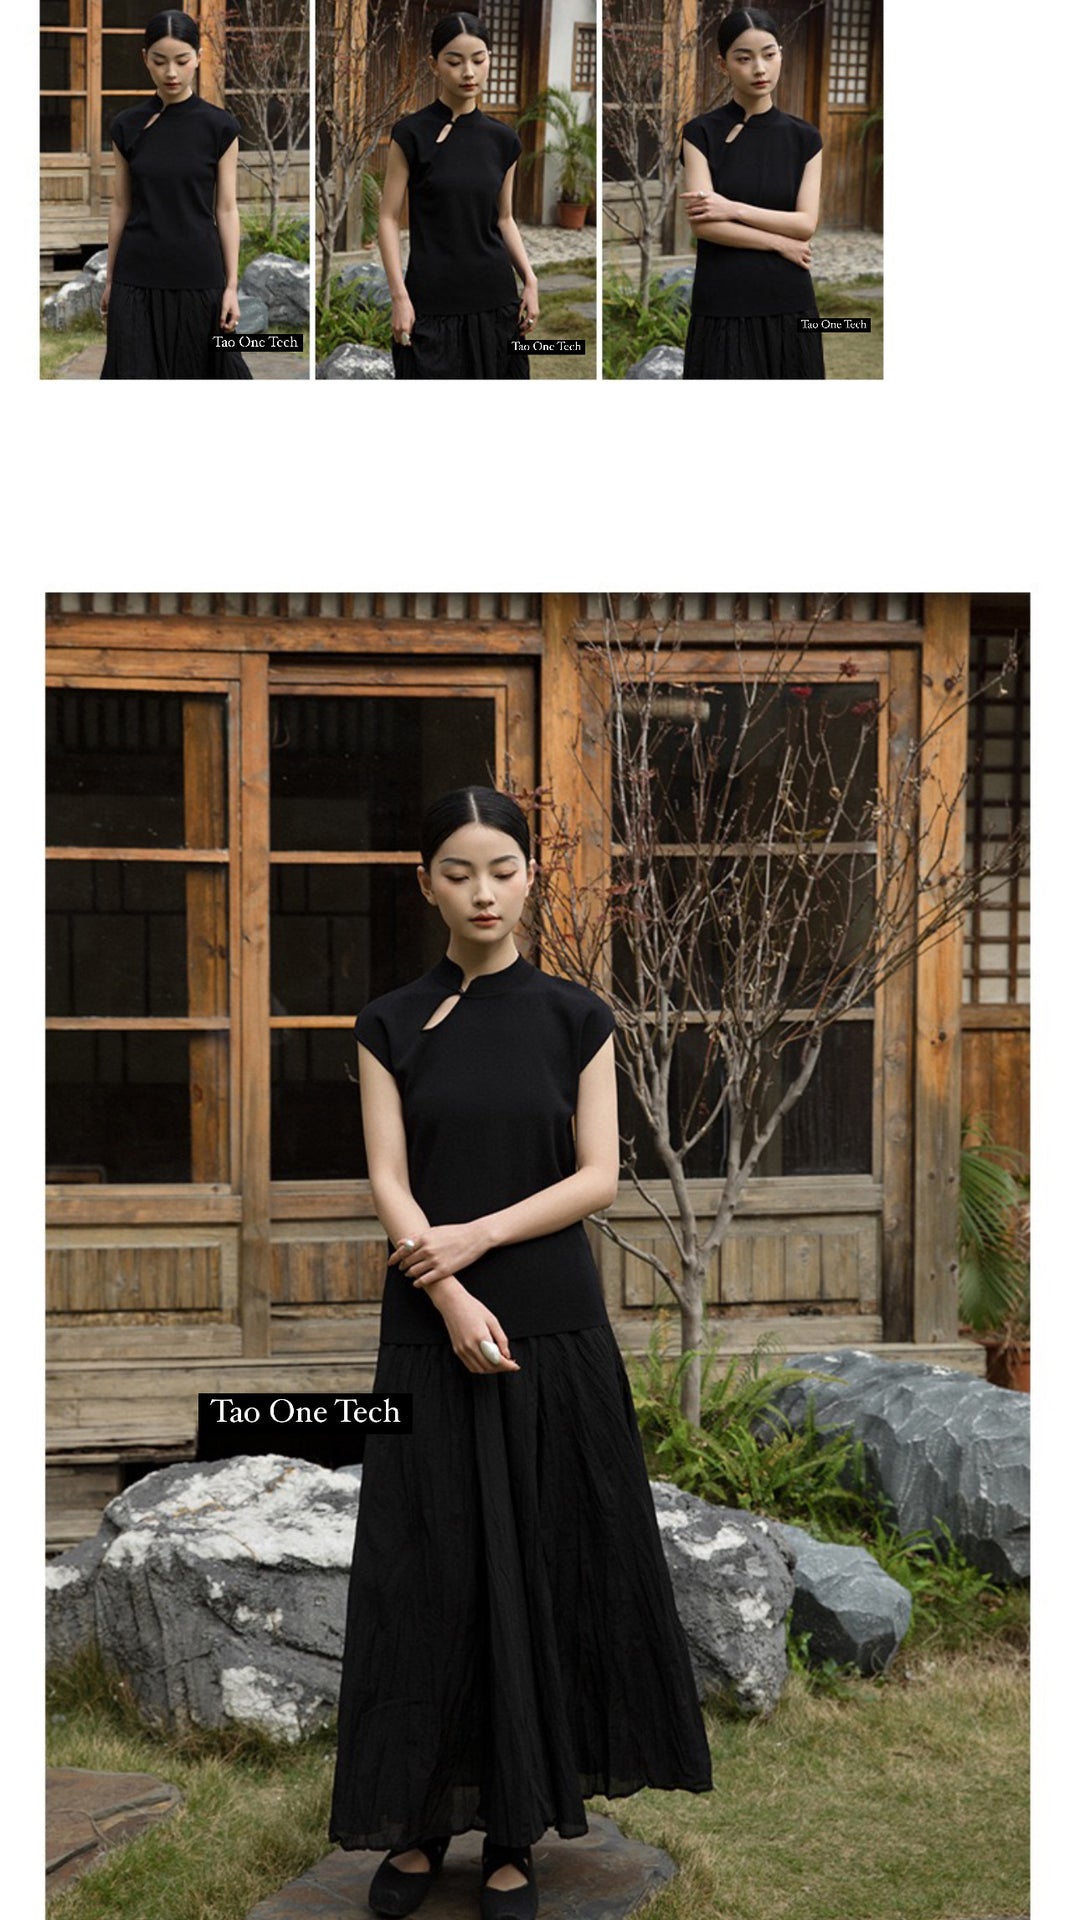 Tao One Tech™ • Cheongsam Collar Knit T-Shirt • Jade-Like Button Closure • Breathable and Elegant